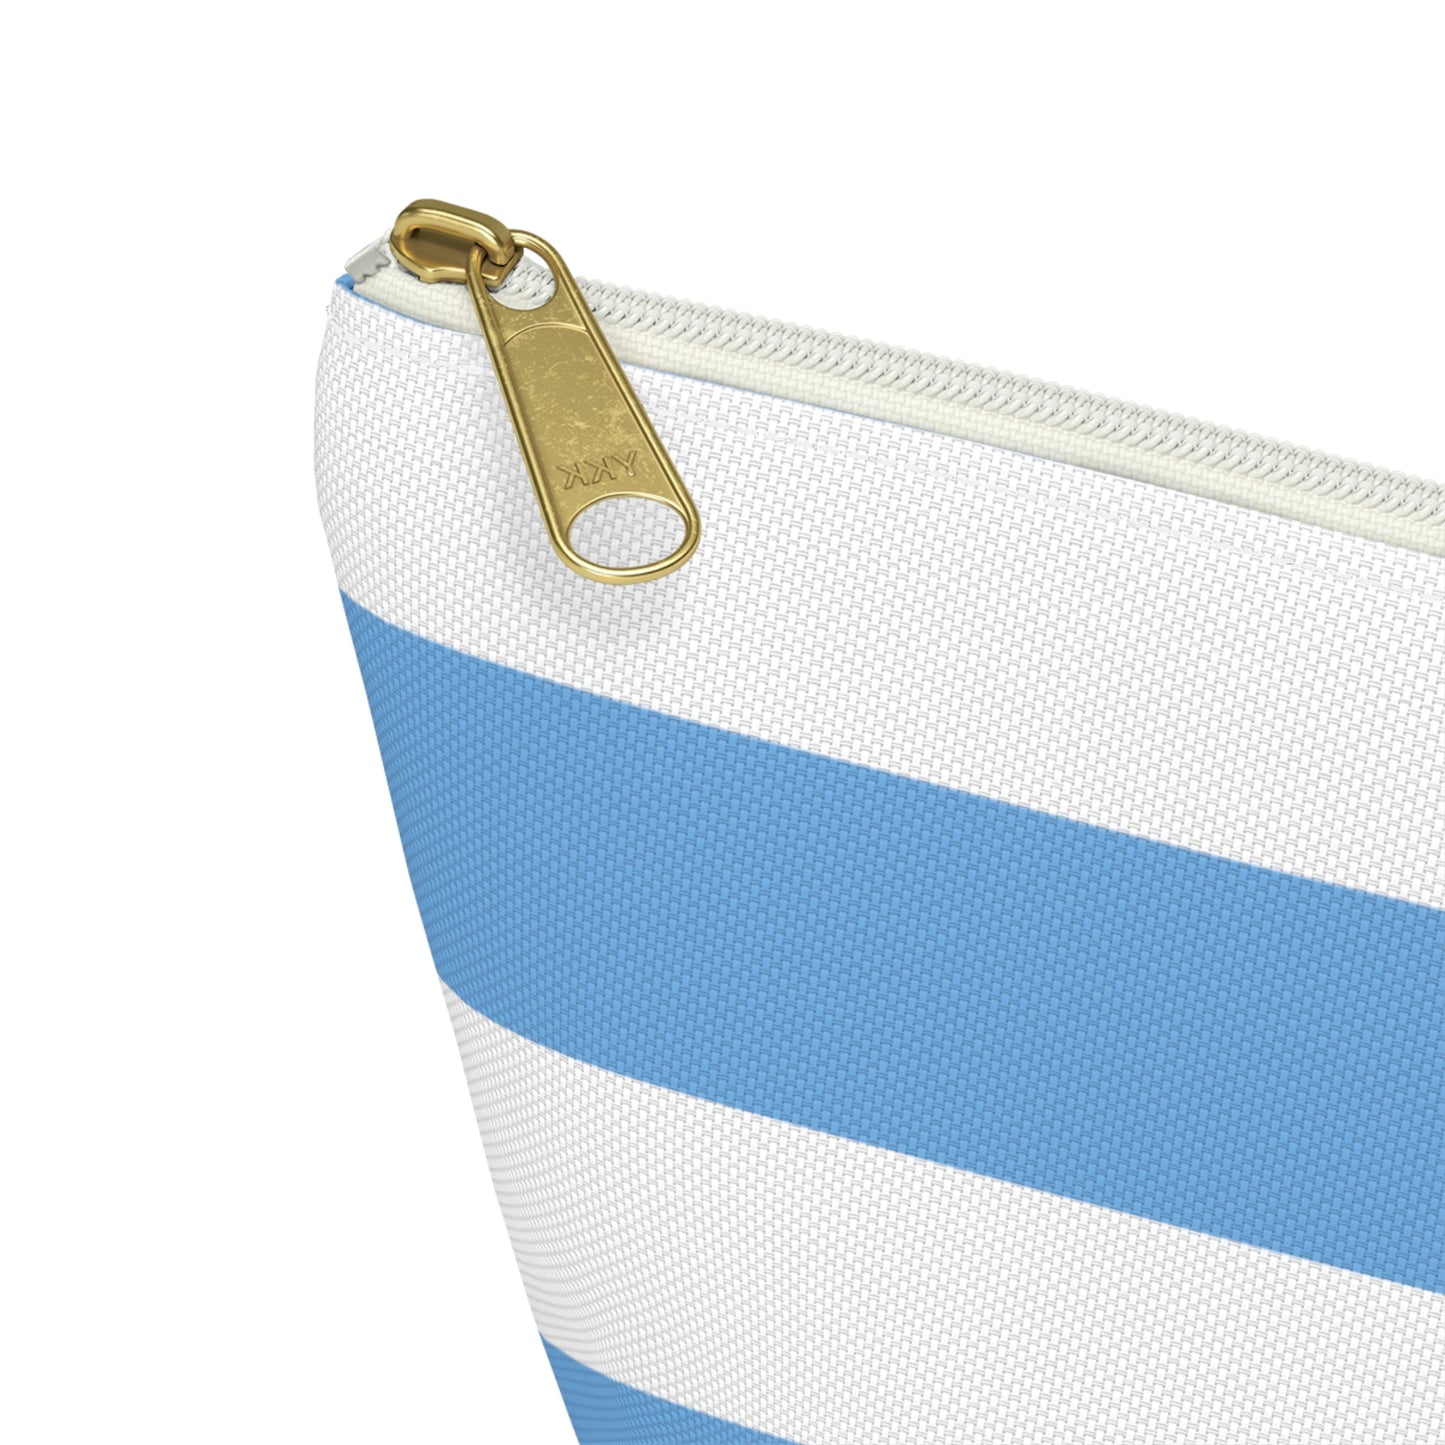 Big Bottom Zipper Pouch - Light Blue/White Stripes